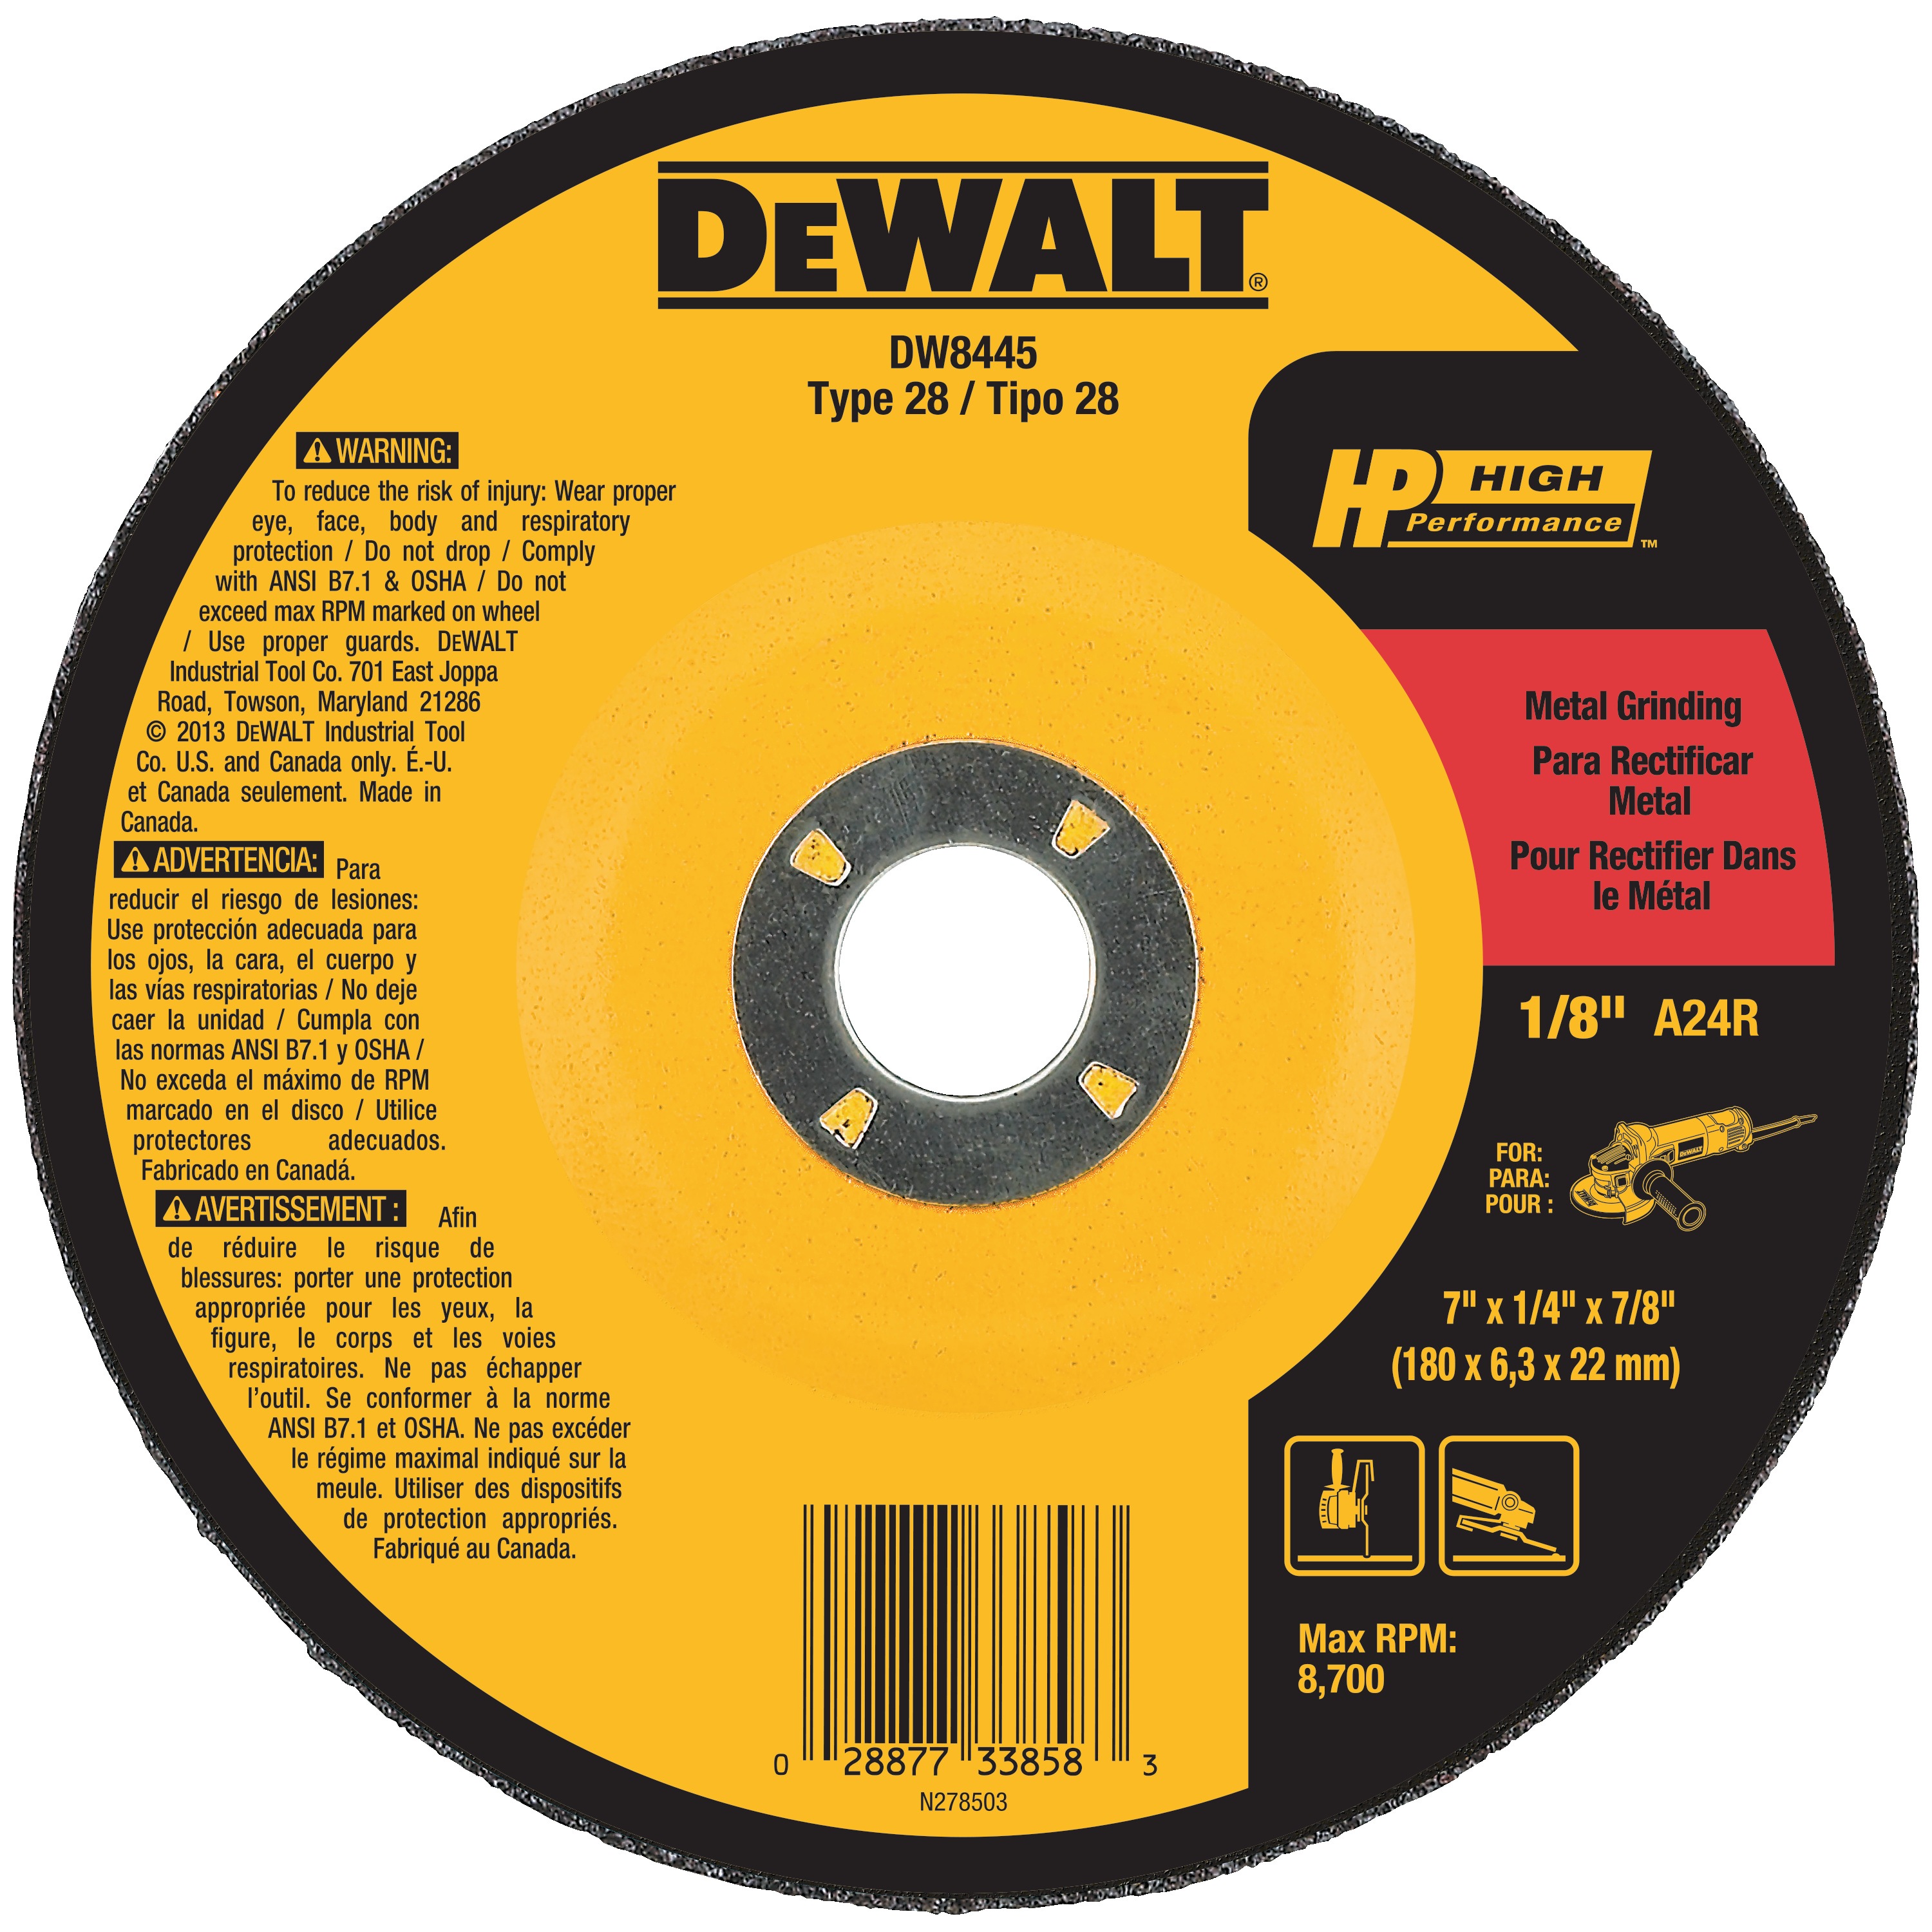 DEWALT - 7 x 14 x 78 T28 metal grinding - DW8445